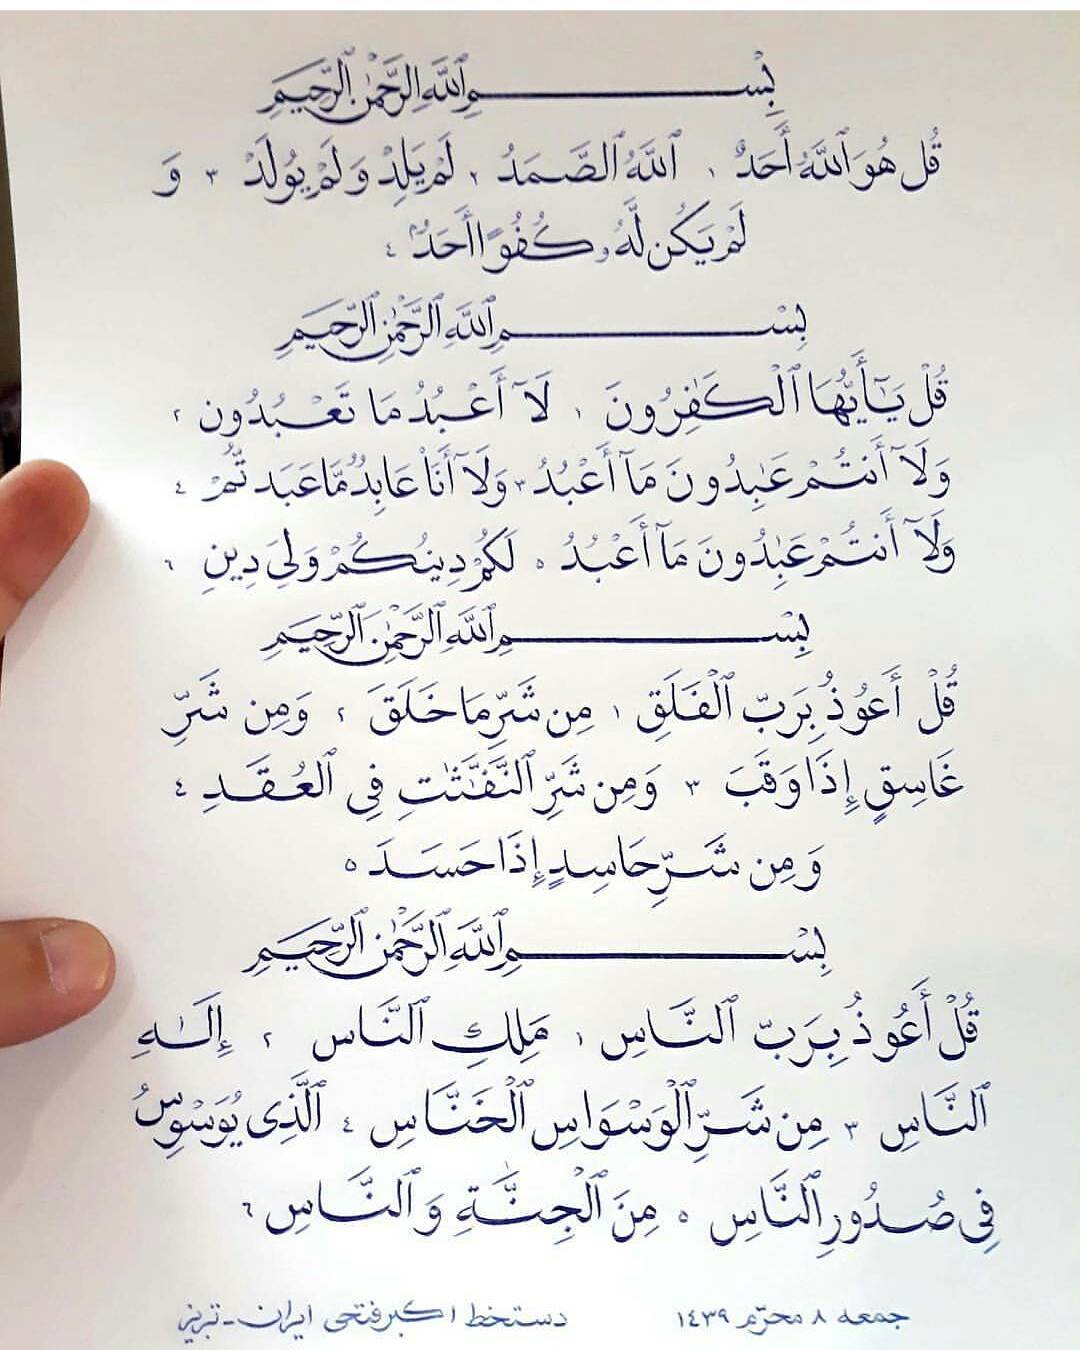 By @akbarfathi56 .
.
.
.
#quran#kuran#Arabic#Calligraphy#handwriting#penandink#i…